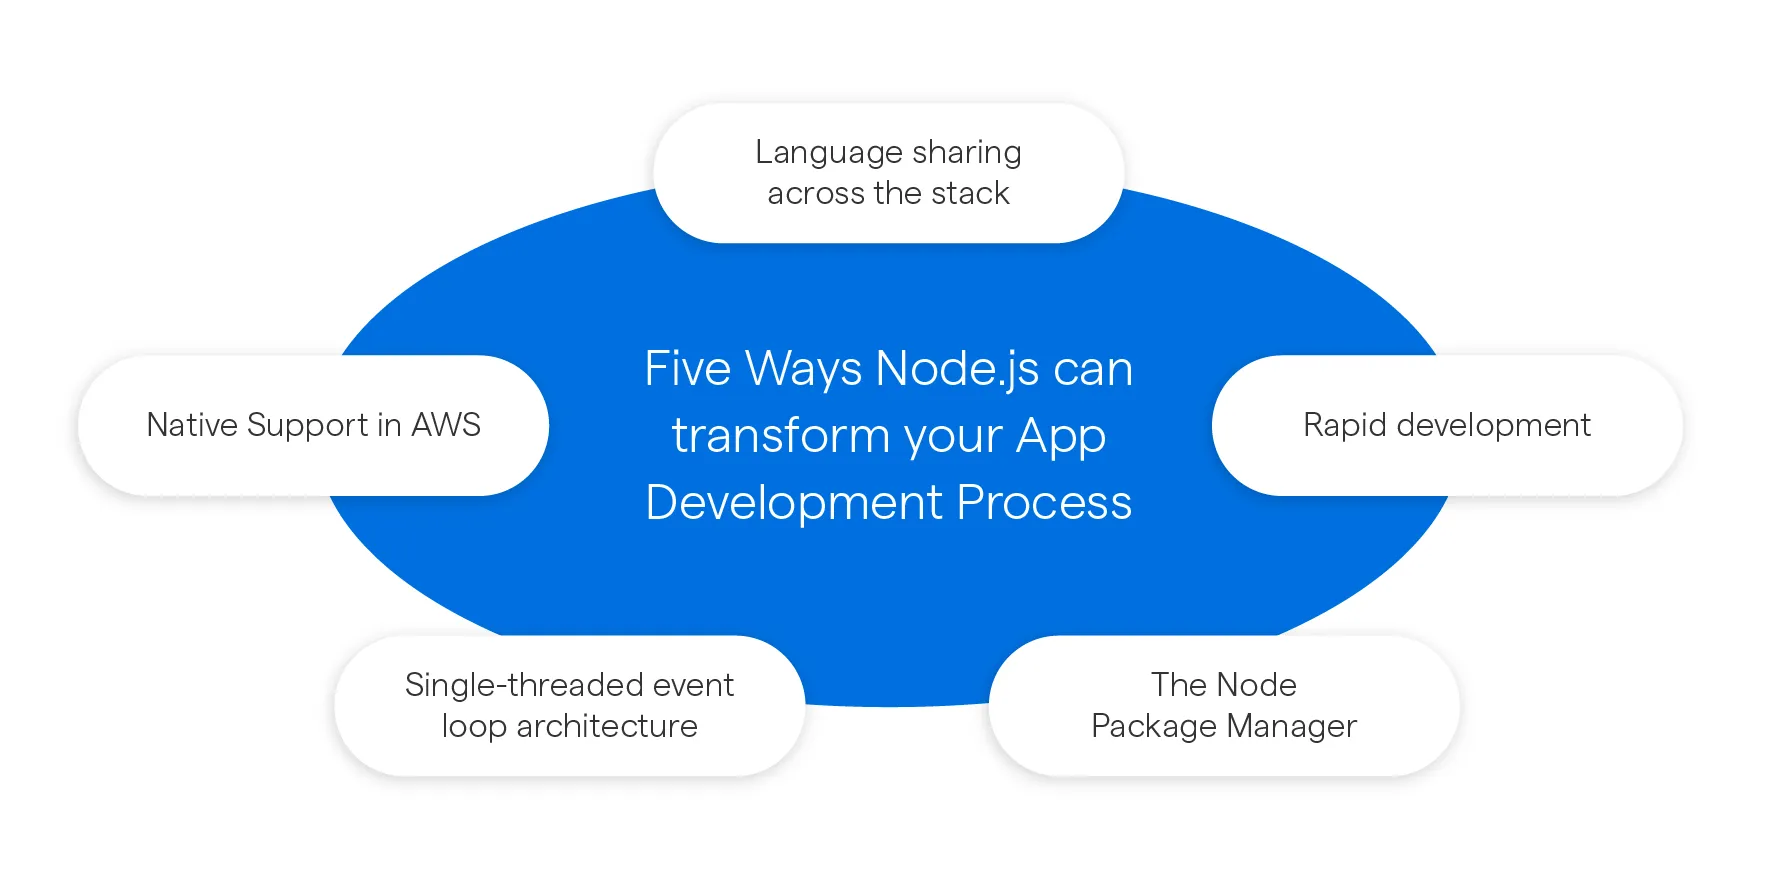 5 Ways Node.js can transform your app development process